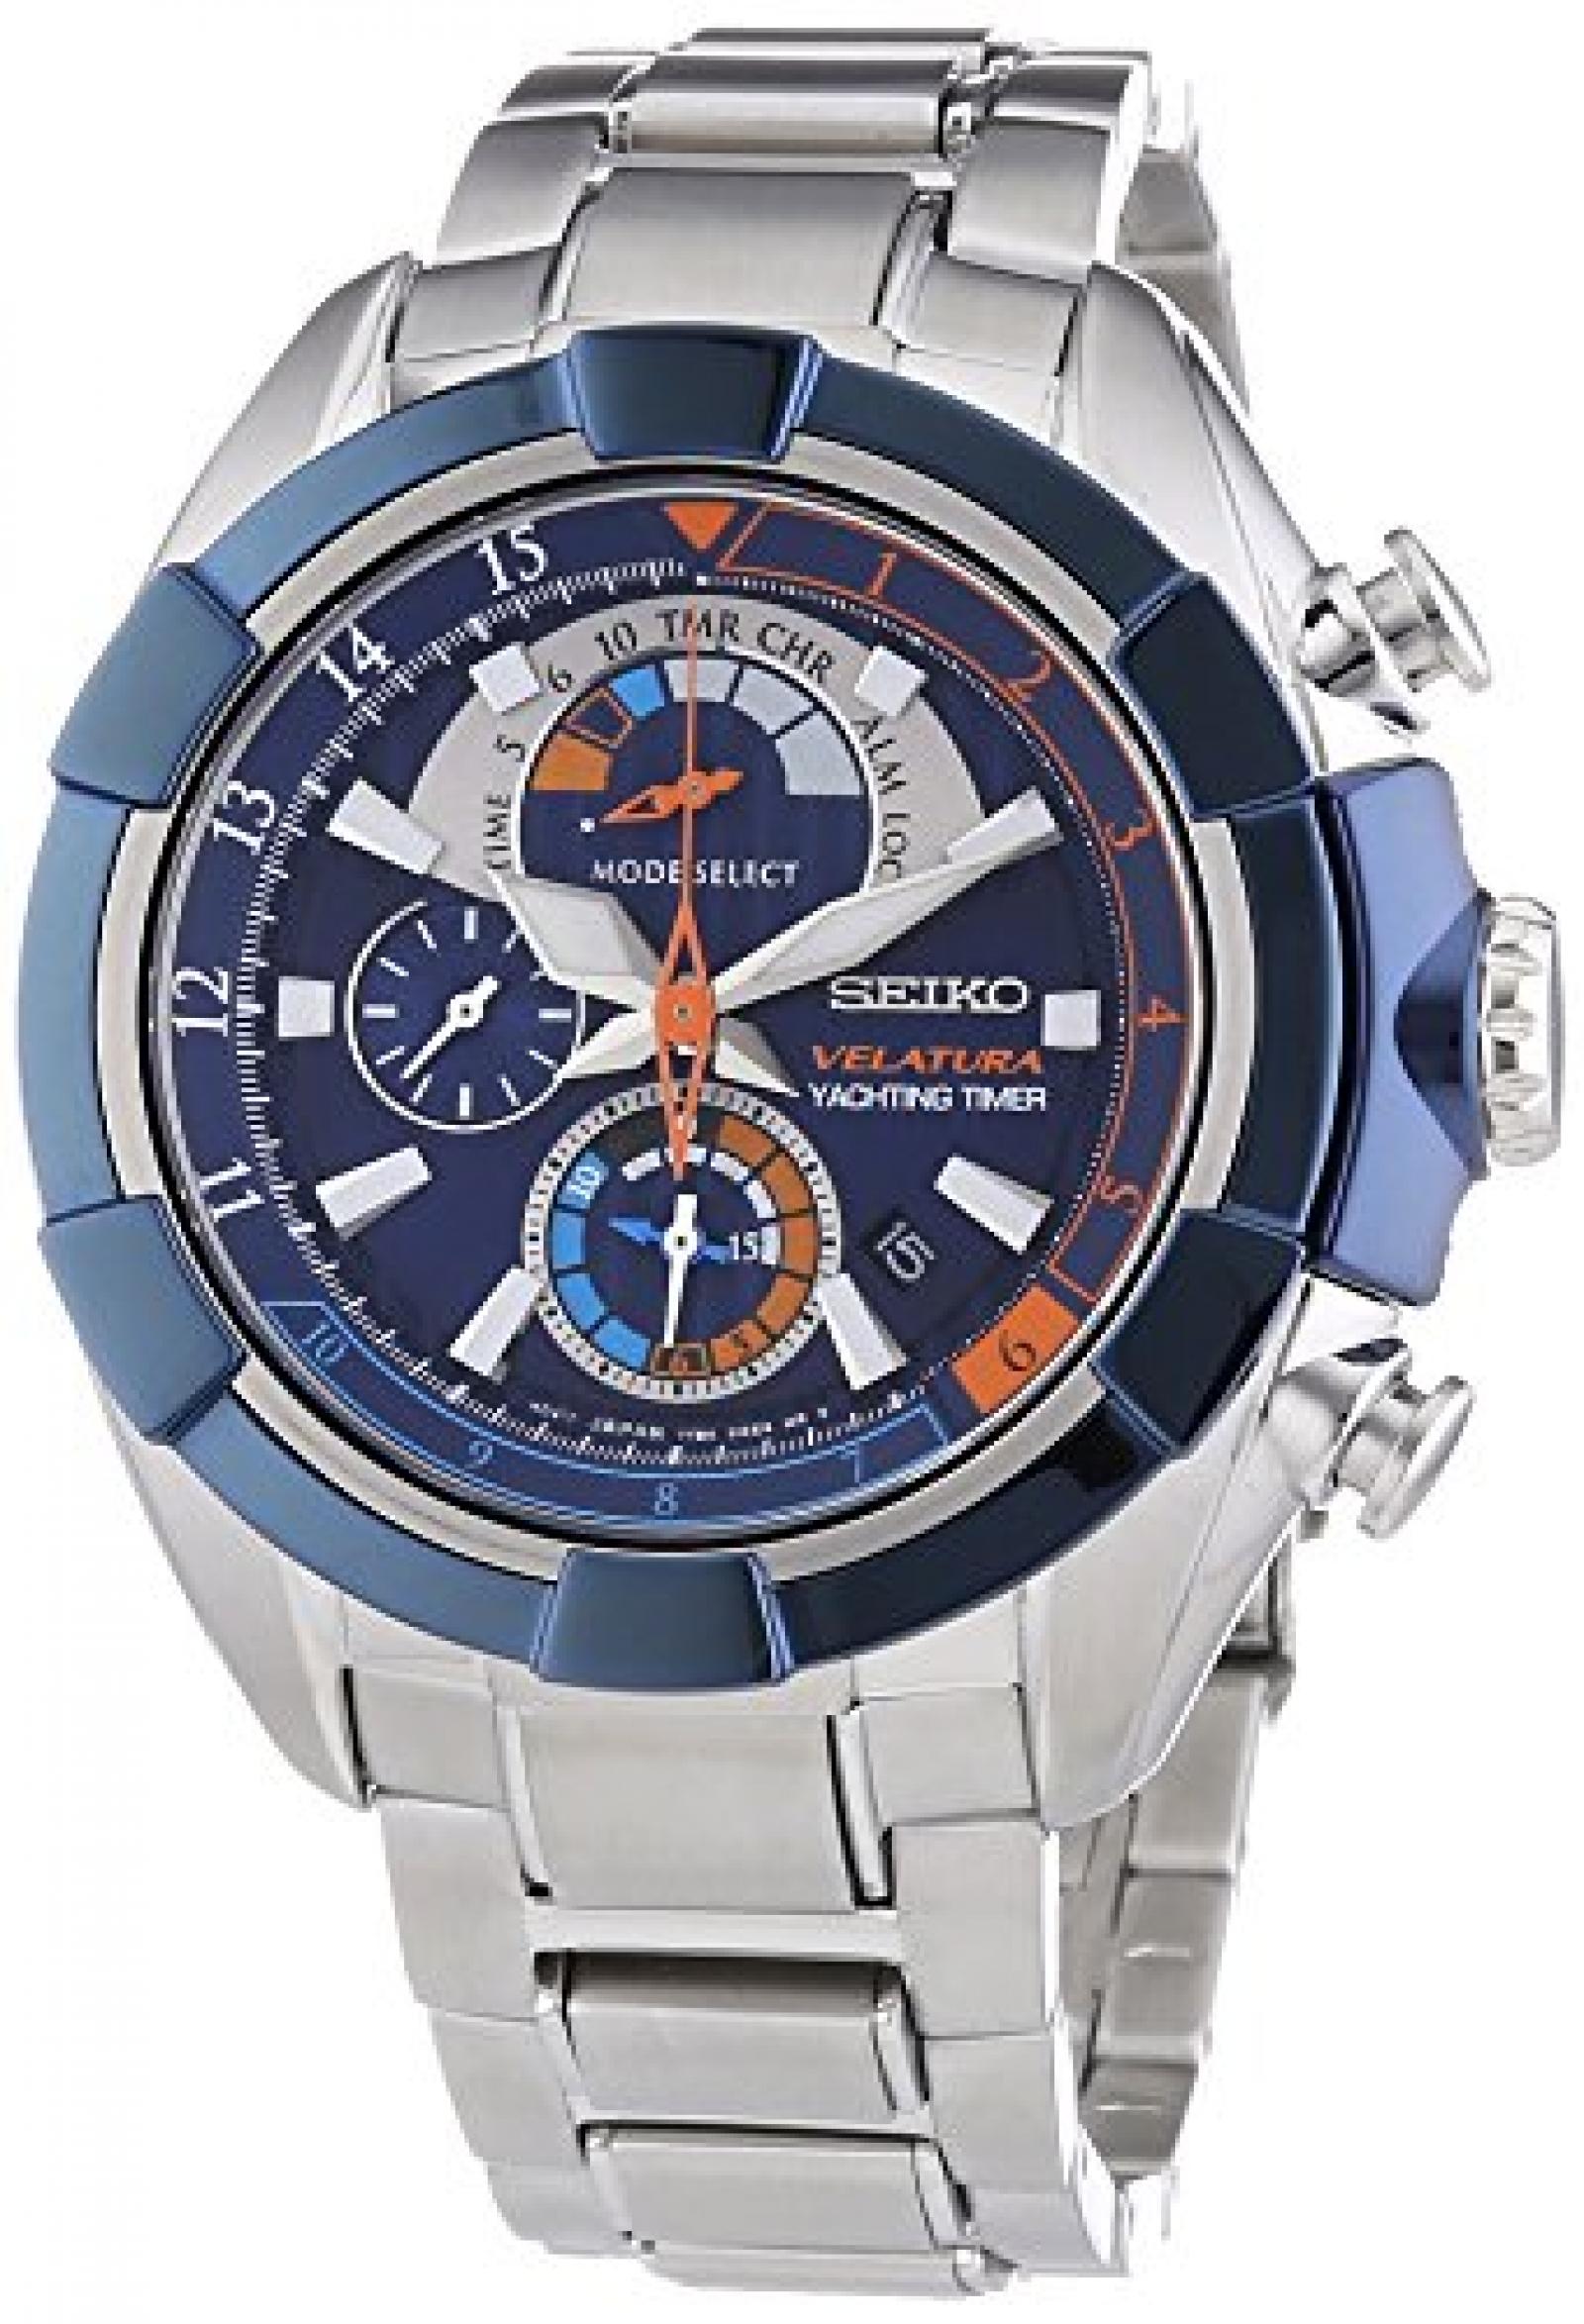 Seiko Herren-Armbanduhr XL Velatura Yachting Timer Chronograph Quarz Edelstahl SPC143P1 